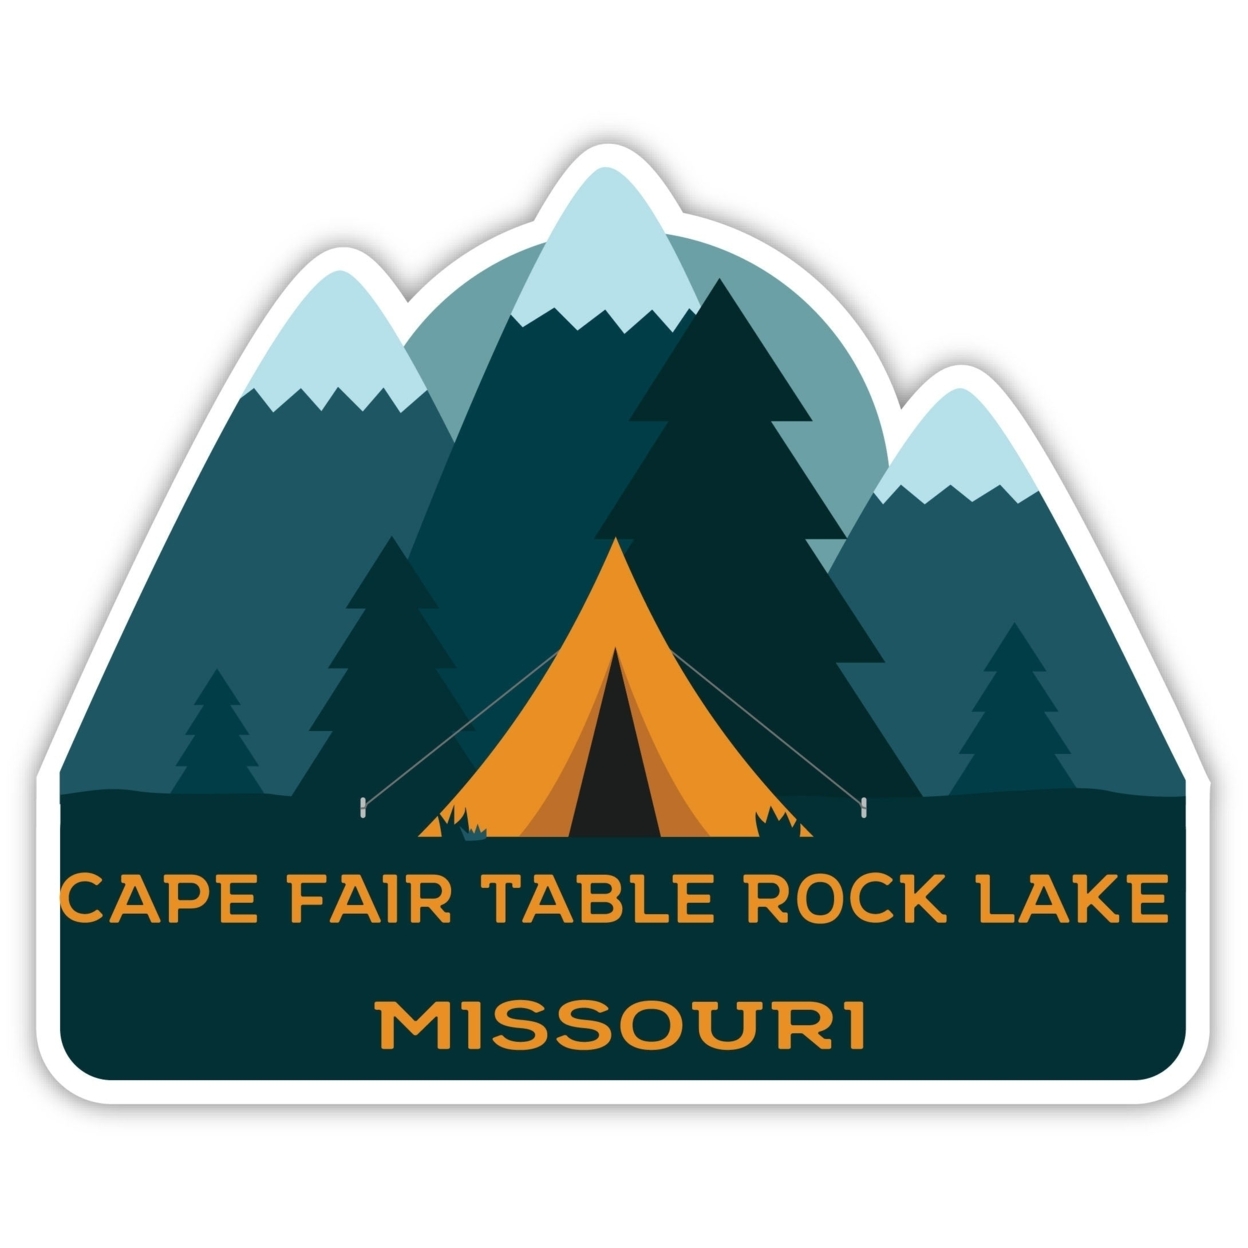 Cape Fair Table Rock Lake Missouri Souvenir Decorative Stickers (Choose Theme And Size) - 4-Pack, 4-Inch, Tent